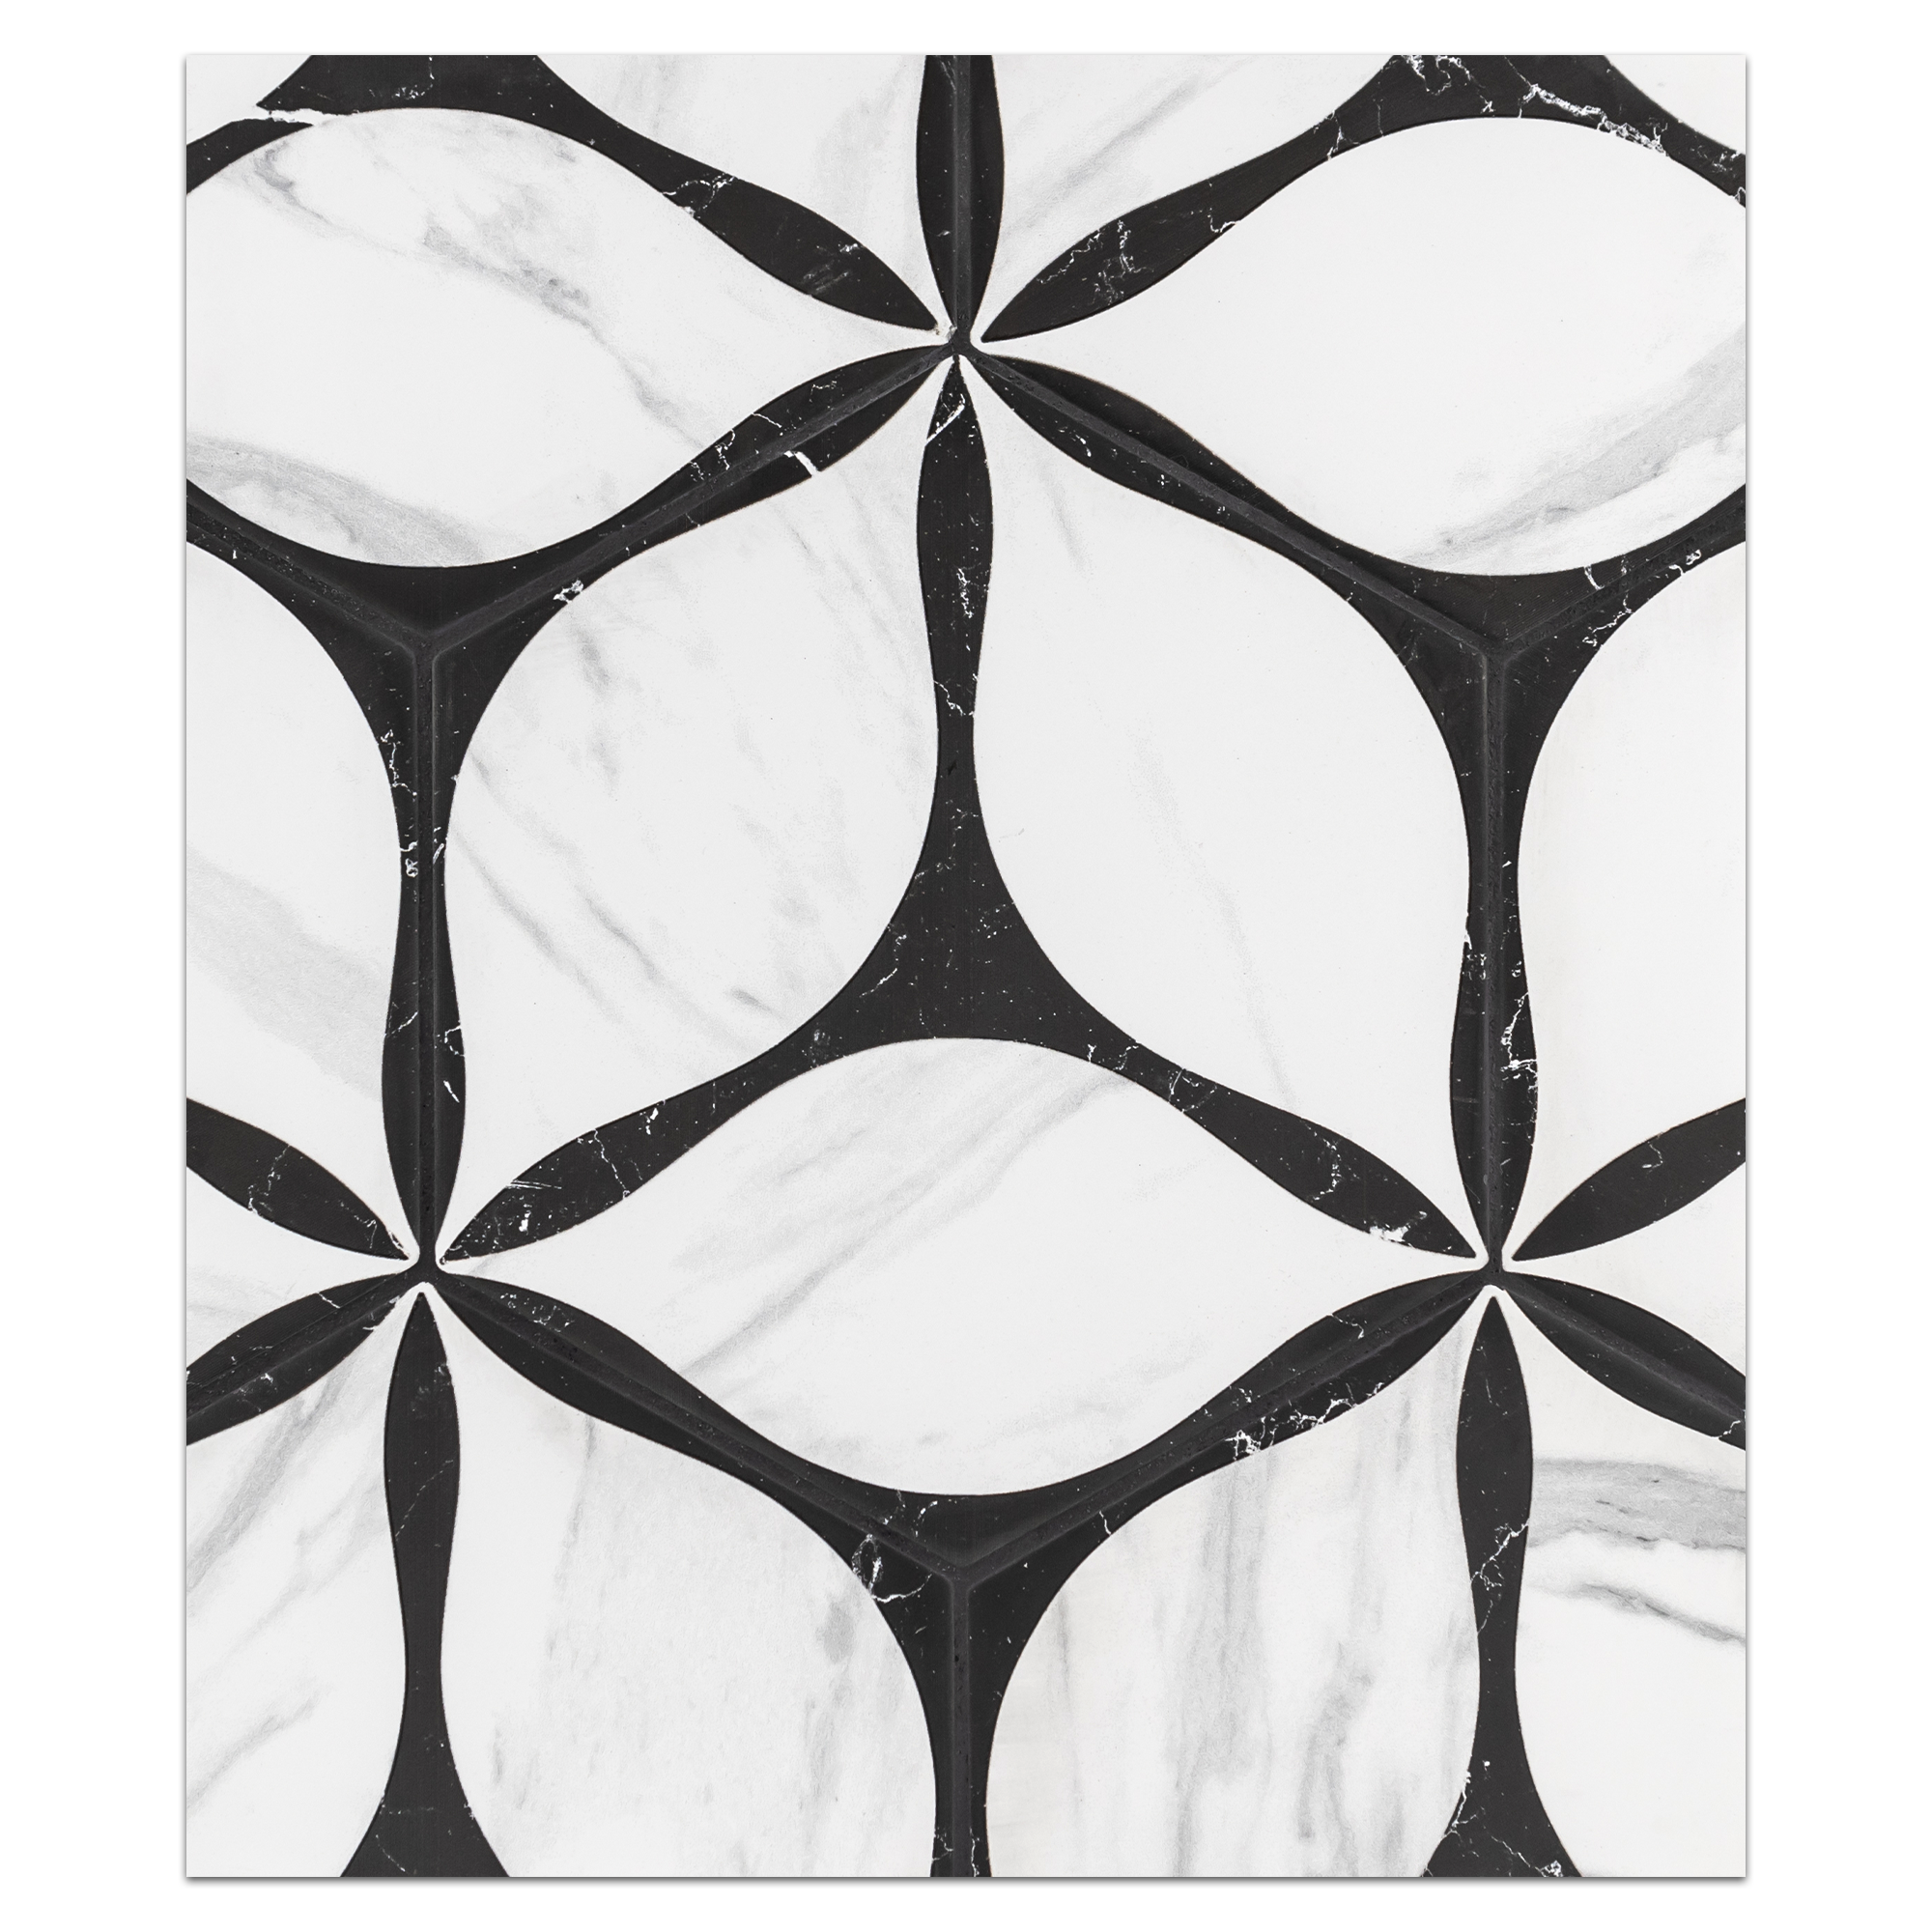 Hexagon Porcelain Boards